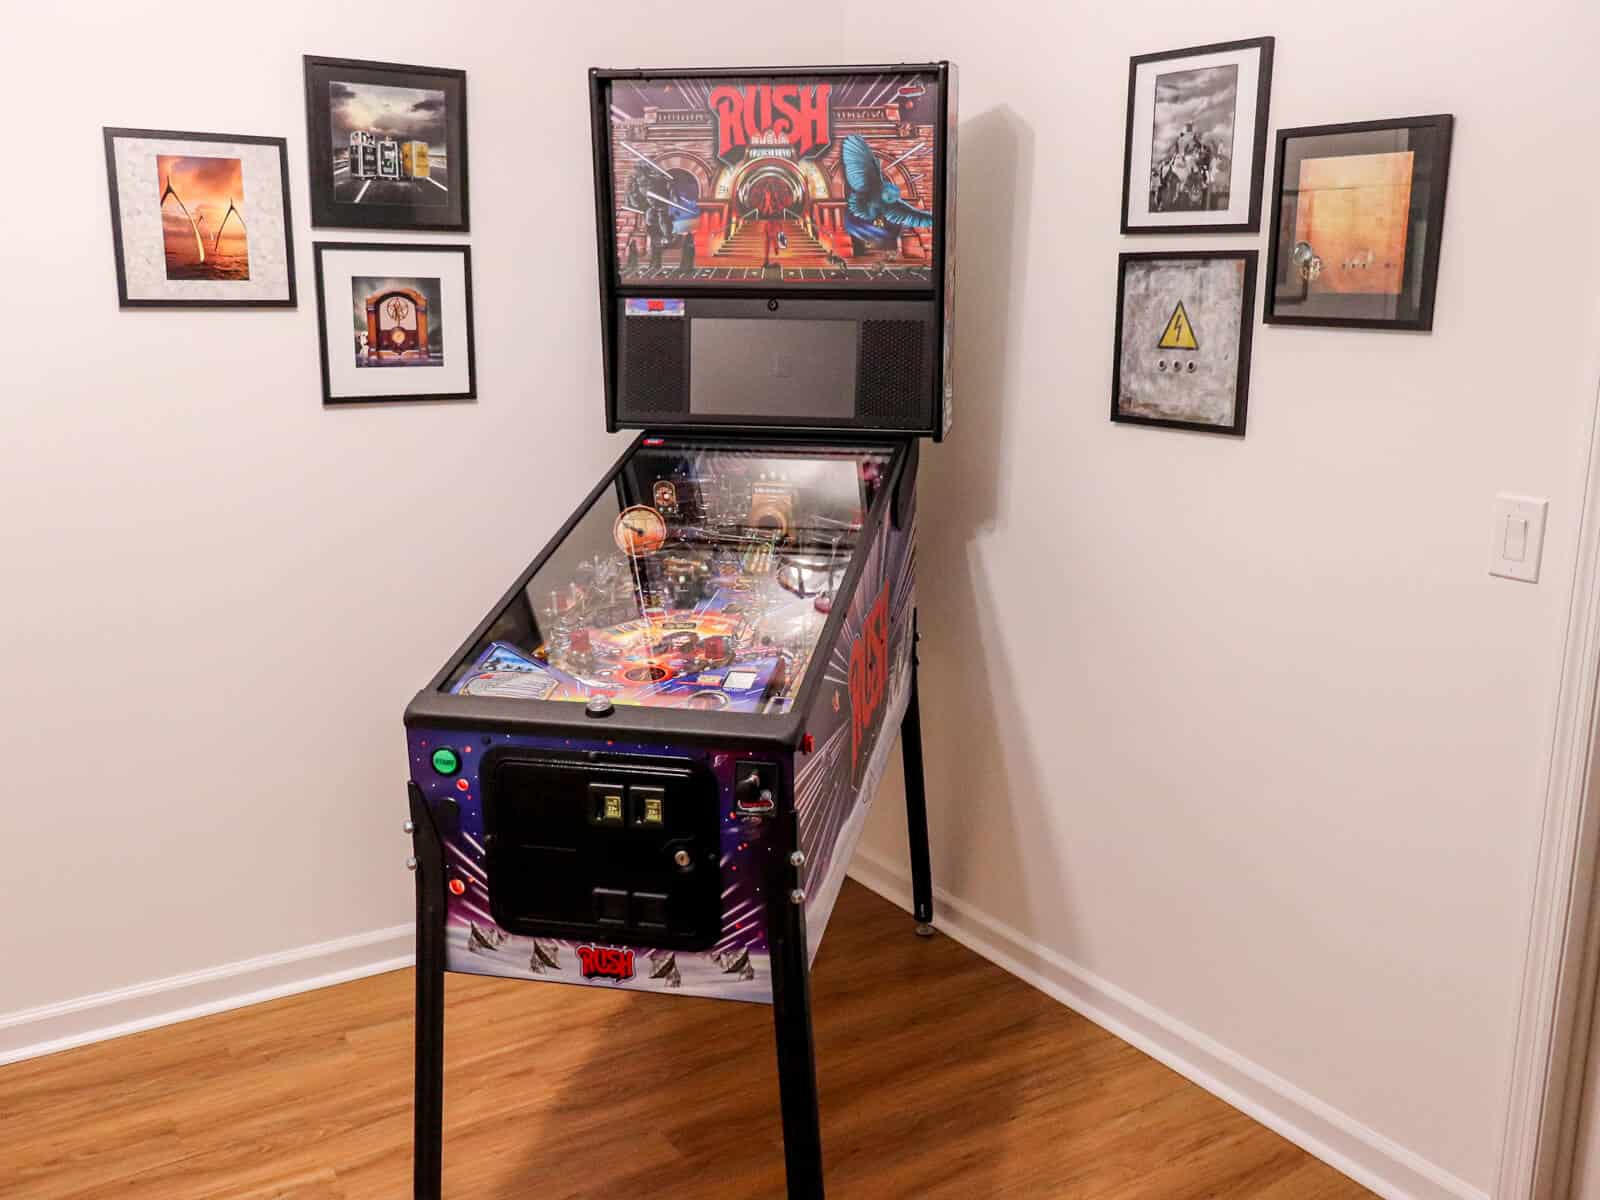 Rush pinball machine by Stern in a basement room